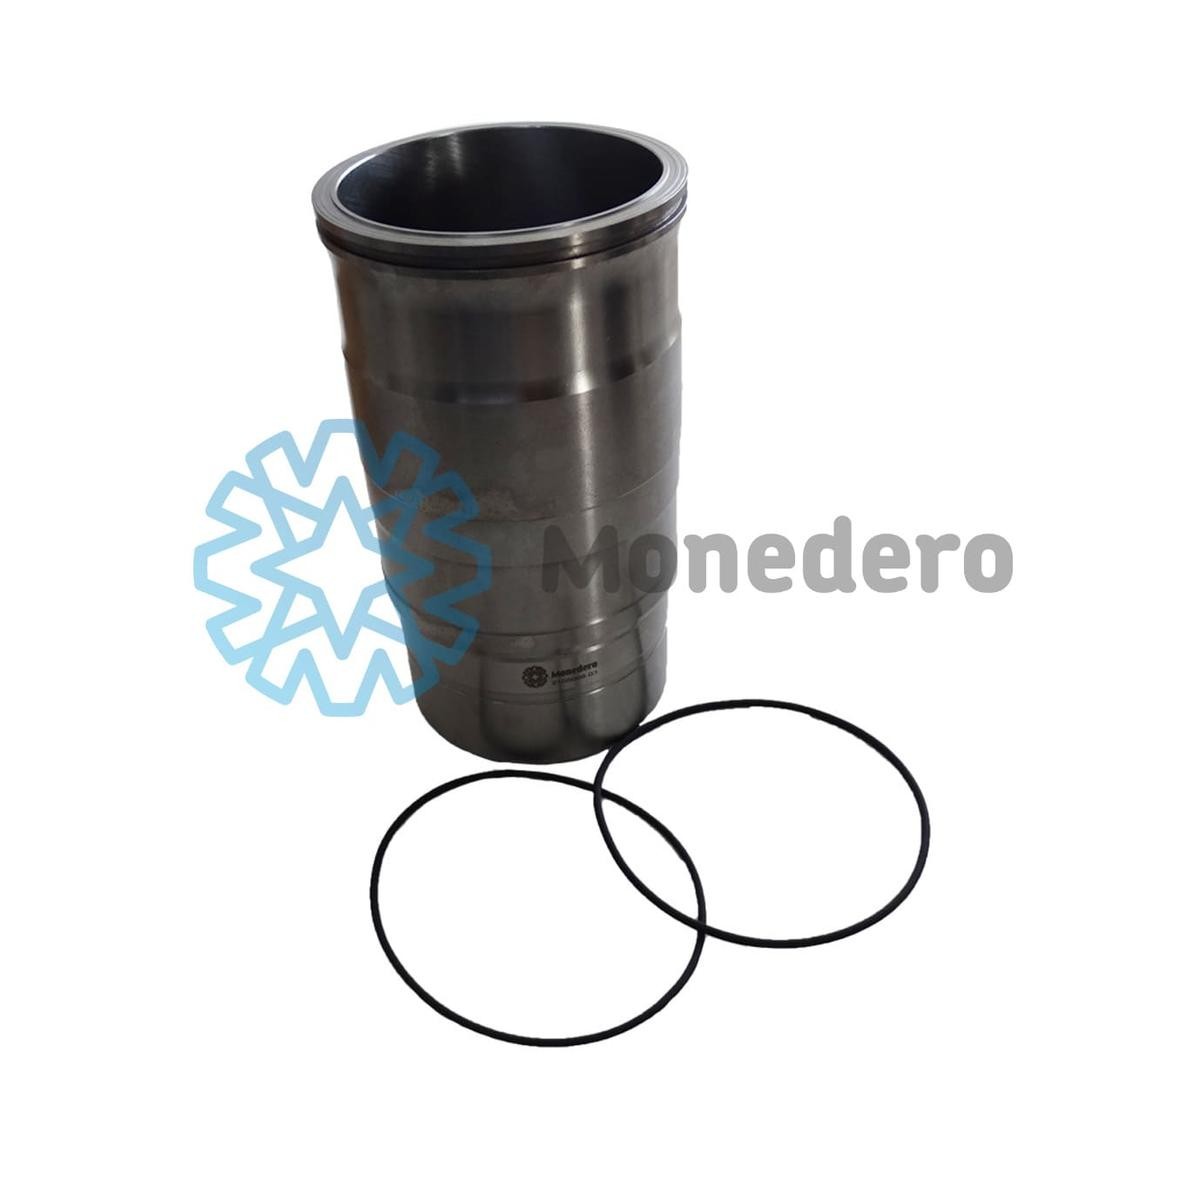 MONEDERO 40011300004 Cylinder Sleeve 2076168